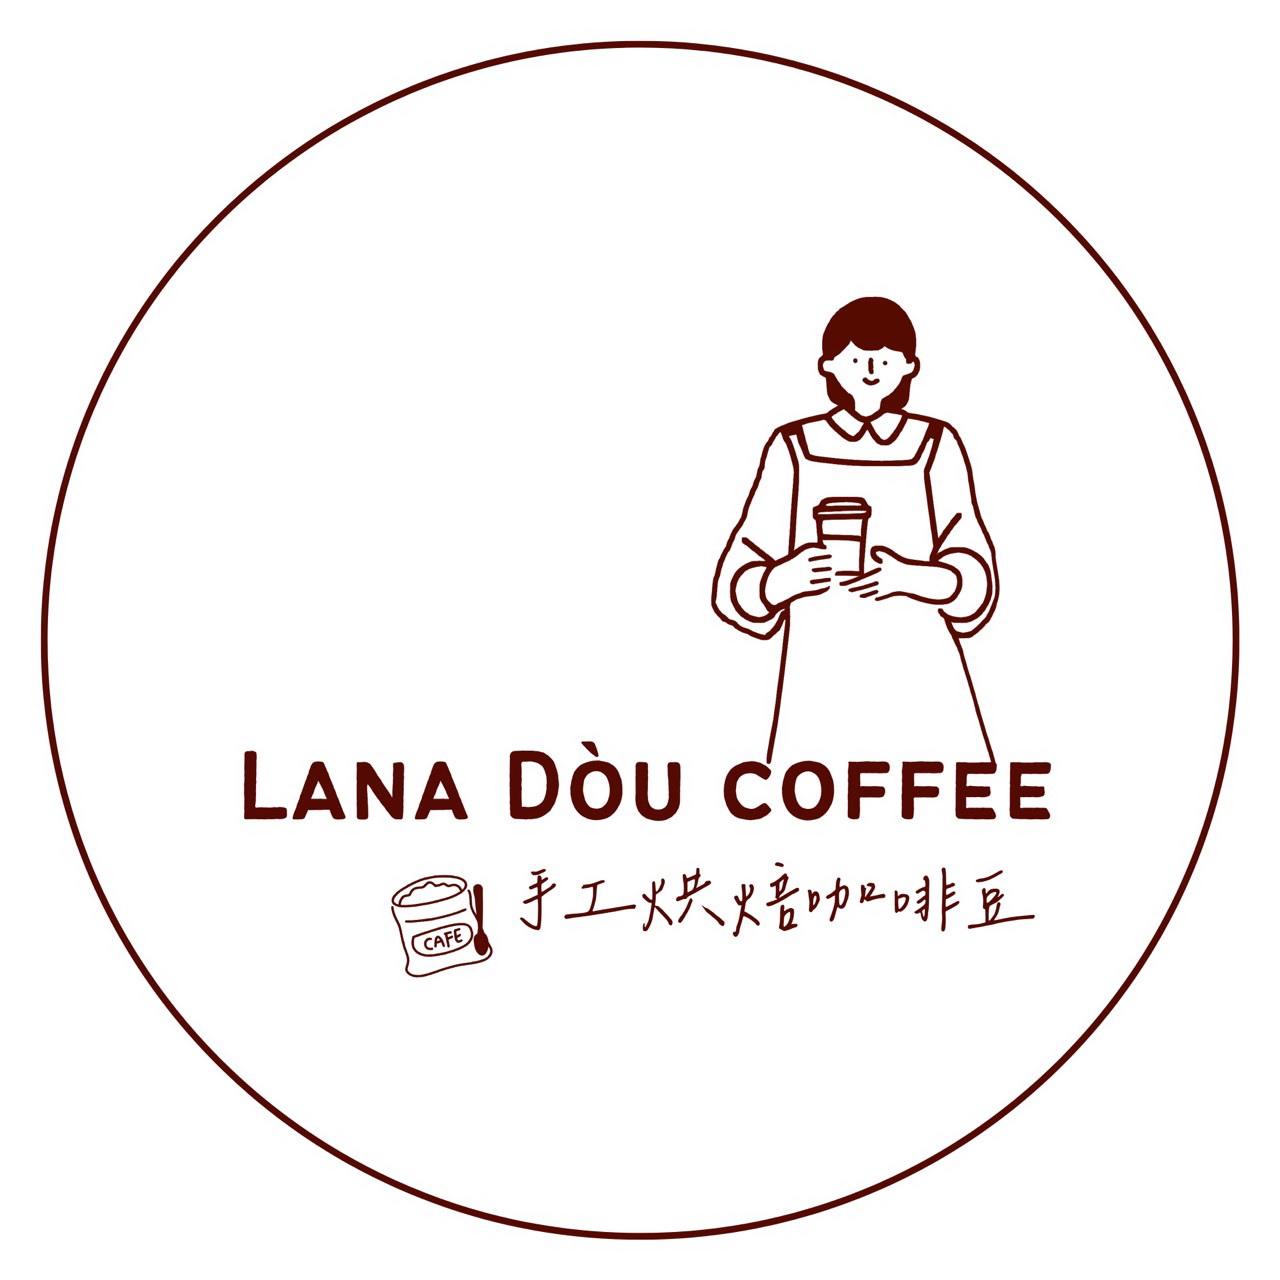 Lana Dóu coffee